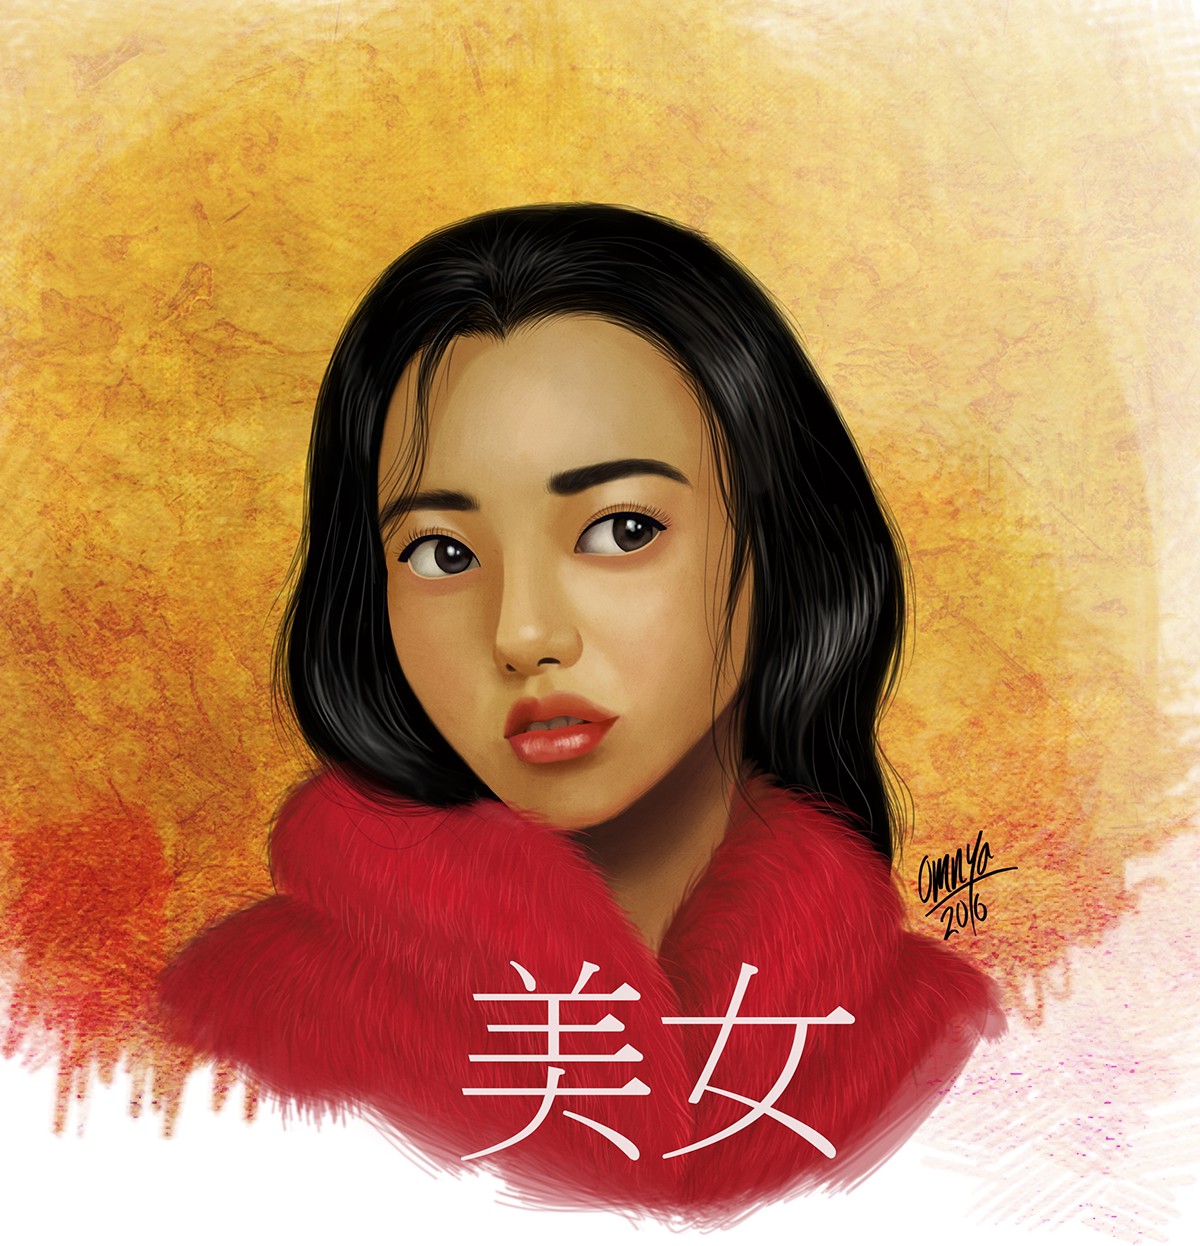 chinese girl Digital Art  fine art Drawing  painting   photoshop Wacom Intuos art red fur ILLUSTRATION 